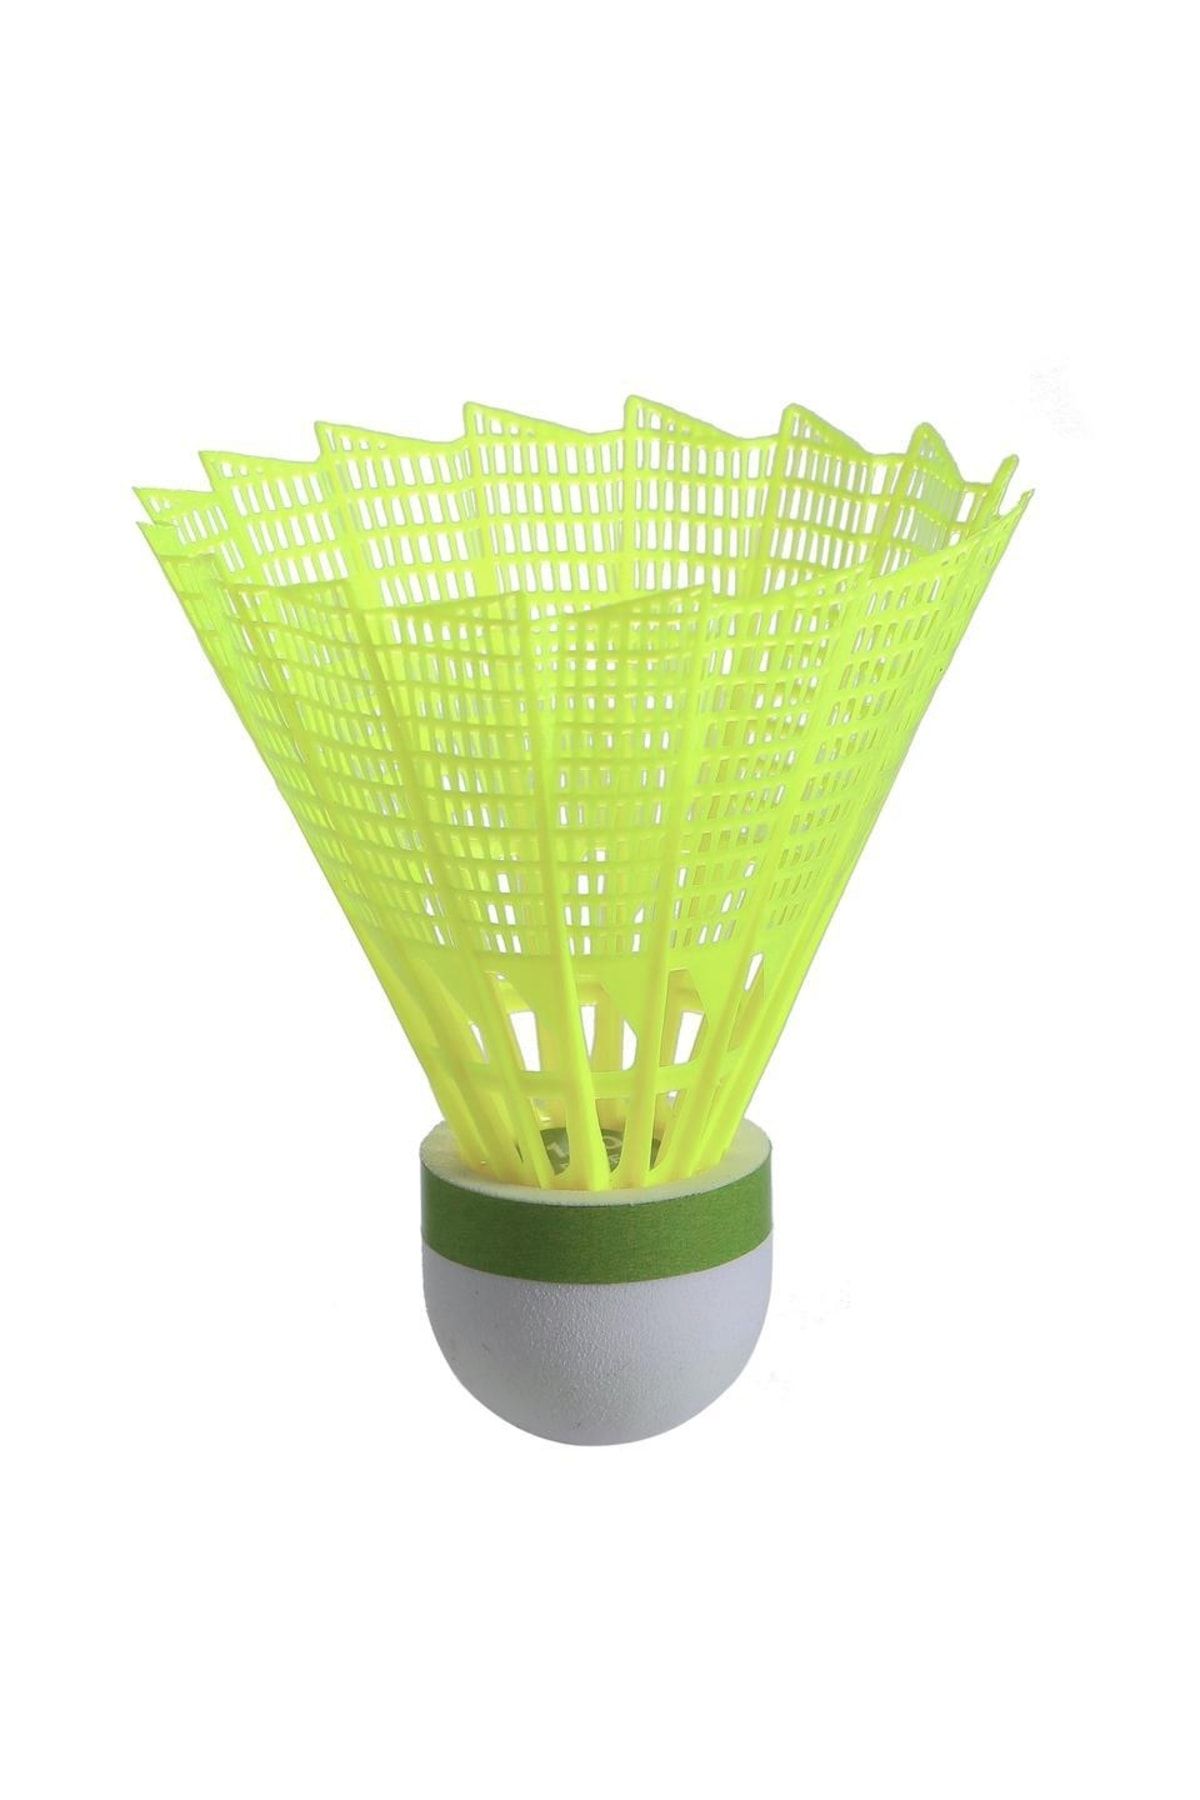 Decathlon Badminton Topu - Plastik Badminton Topu - 6'lı Paket - Orta Boy